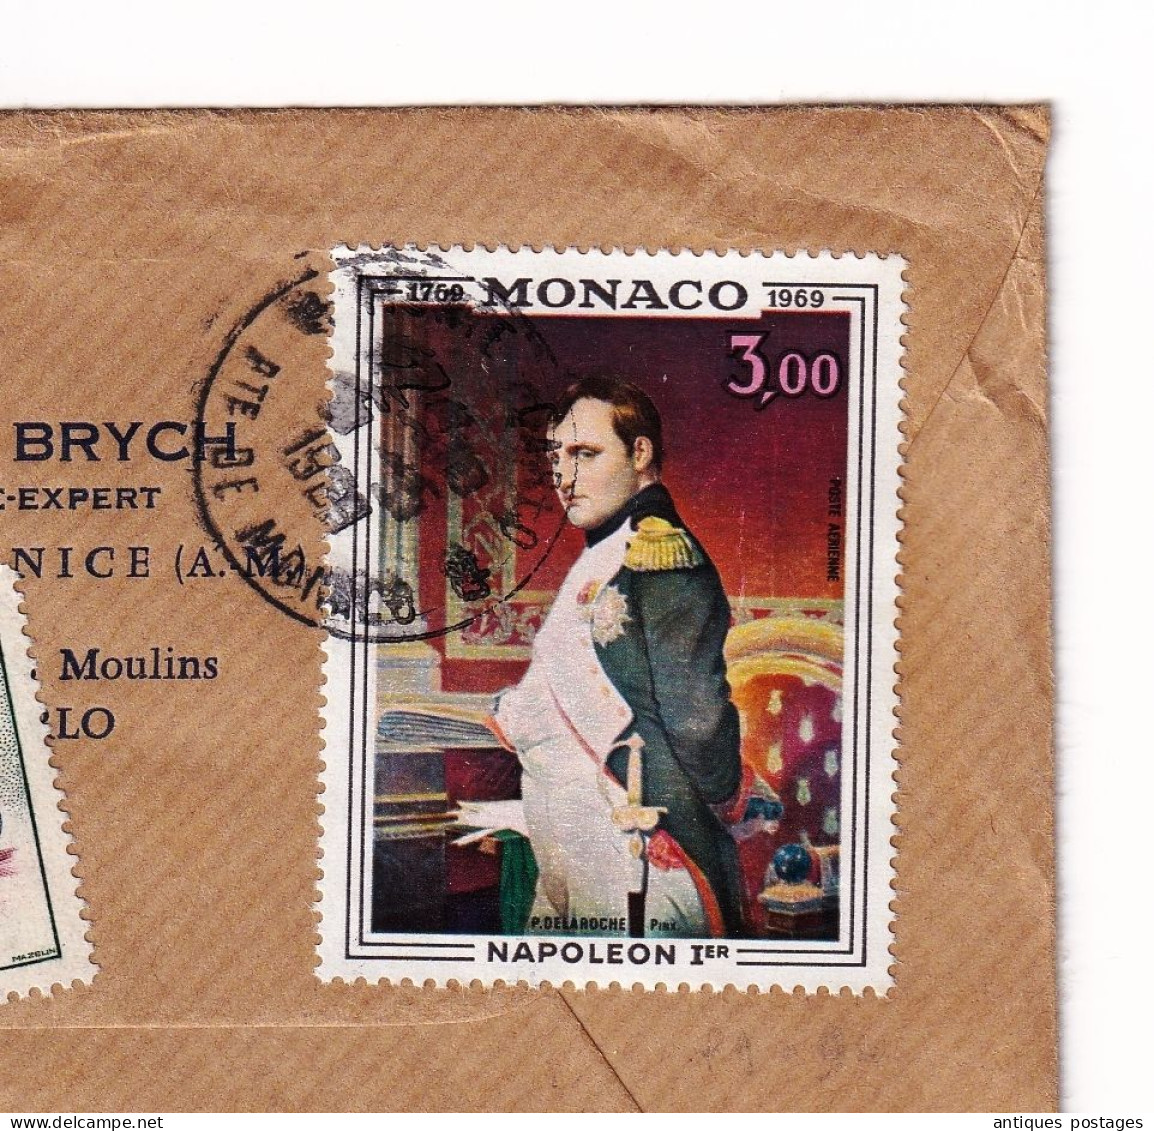 Lettre Recommandée 1959 Monaco François Brych Expert Empereur Napoléon Ier Bonaparte Paire Alfa Romeo 1950 - Cartas & Documentos